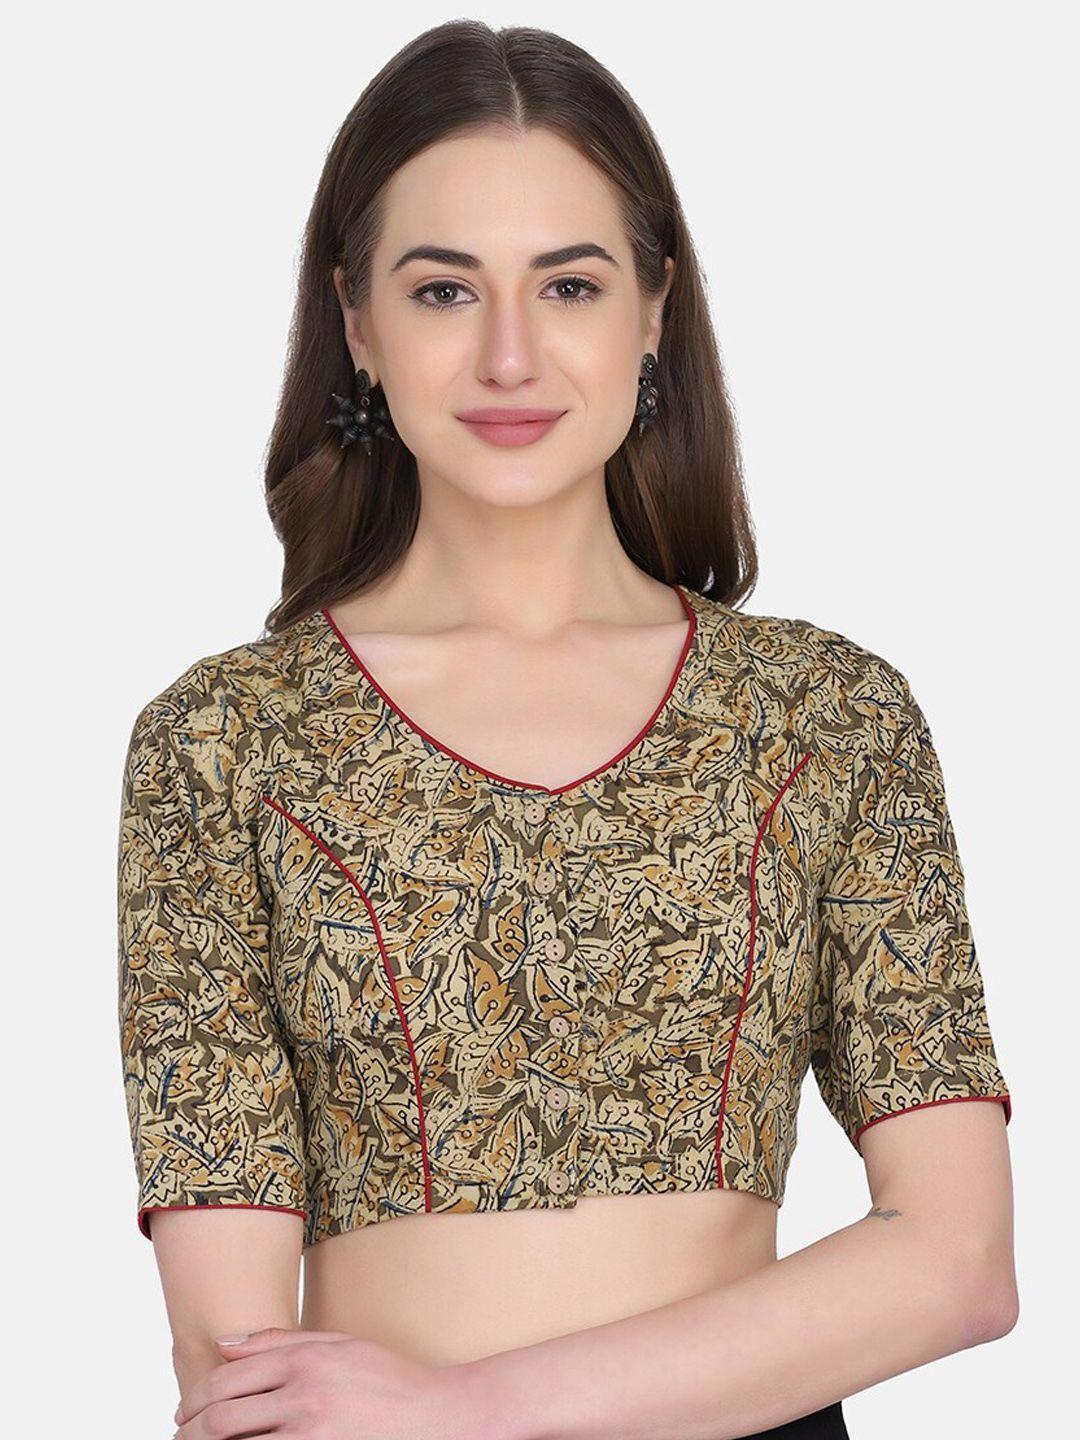 the-weave-traveller-women-brown-&-beige-kalamkari-block-printed-saree-blouse